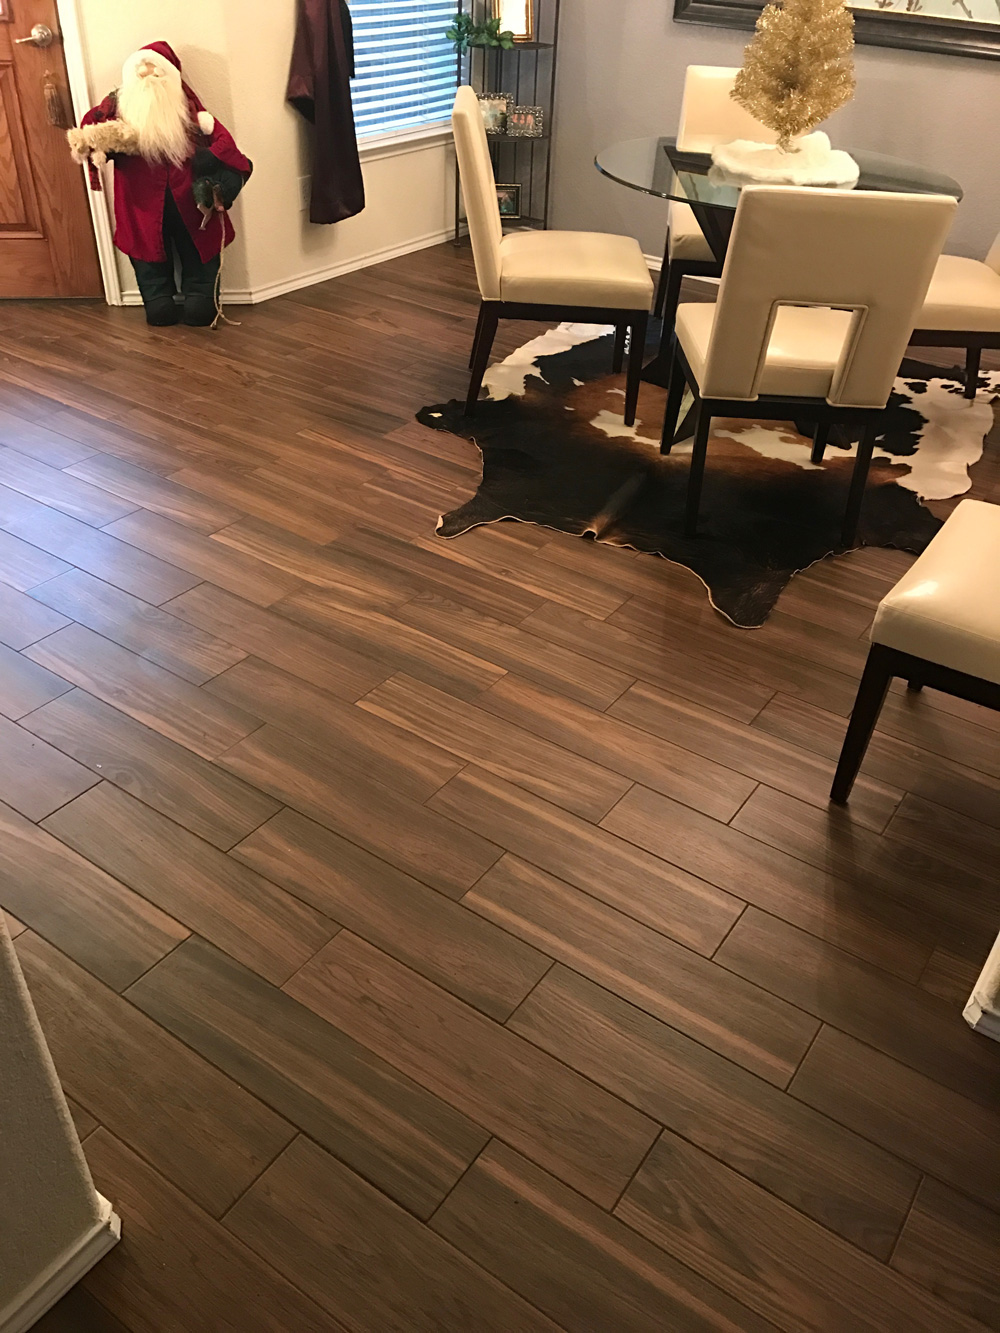 Tile Plank Flooring - Pride Floors & Construction | San Antonio, Hardwood  Flooring, Tile, Carpet, and Remodeling